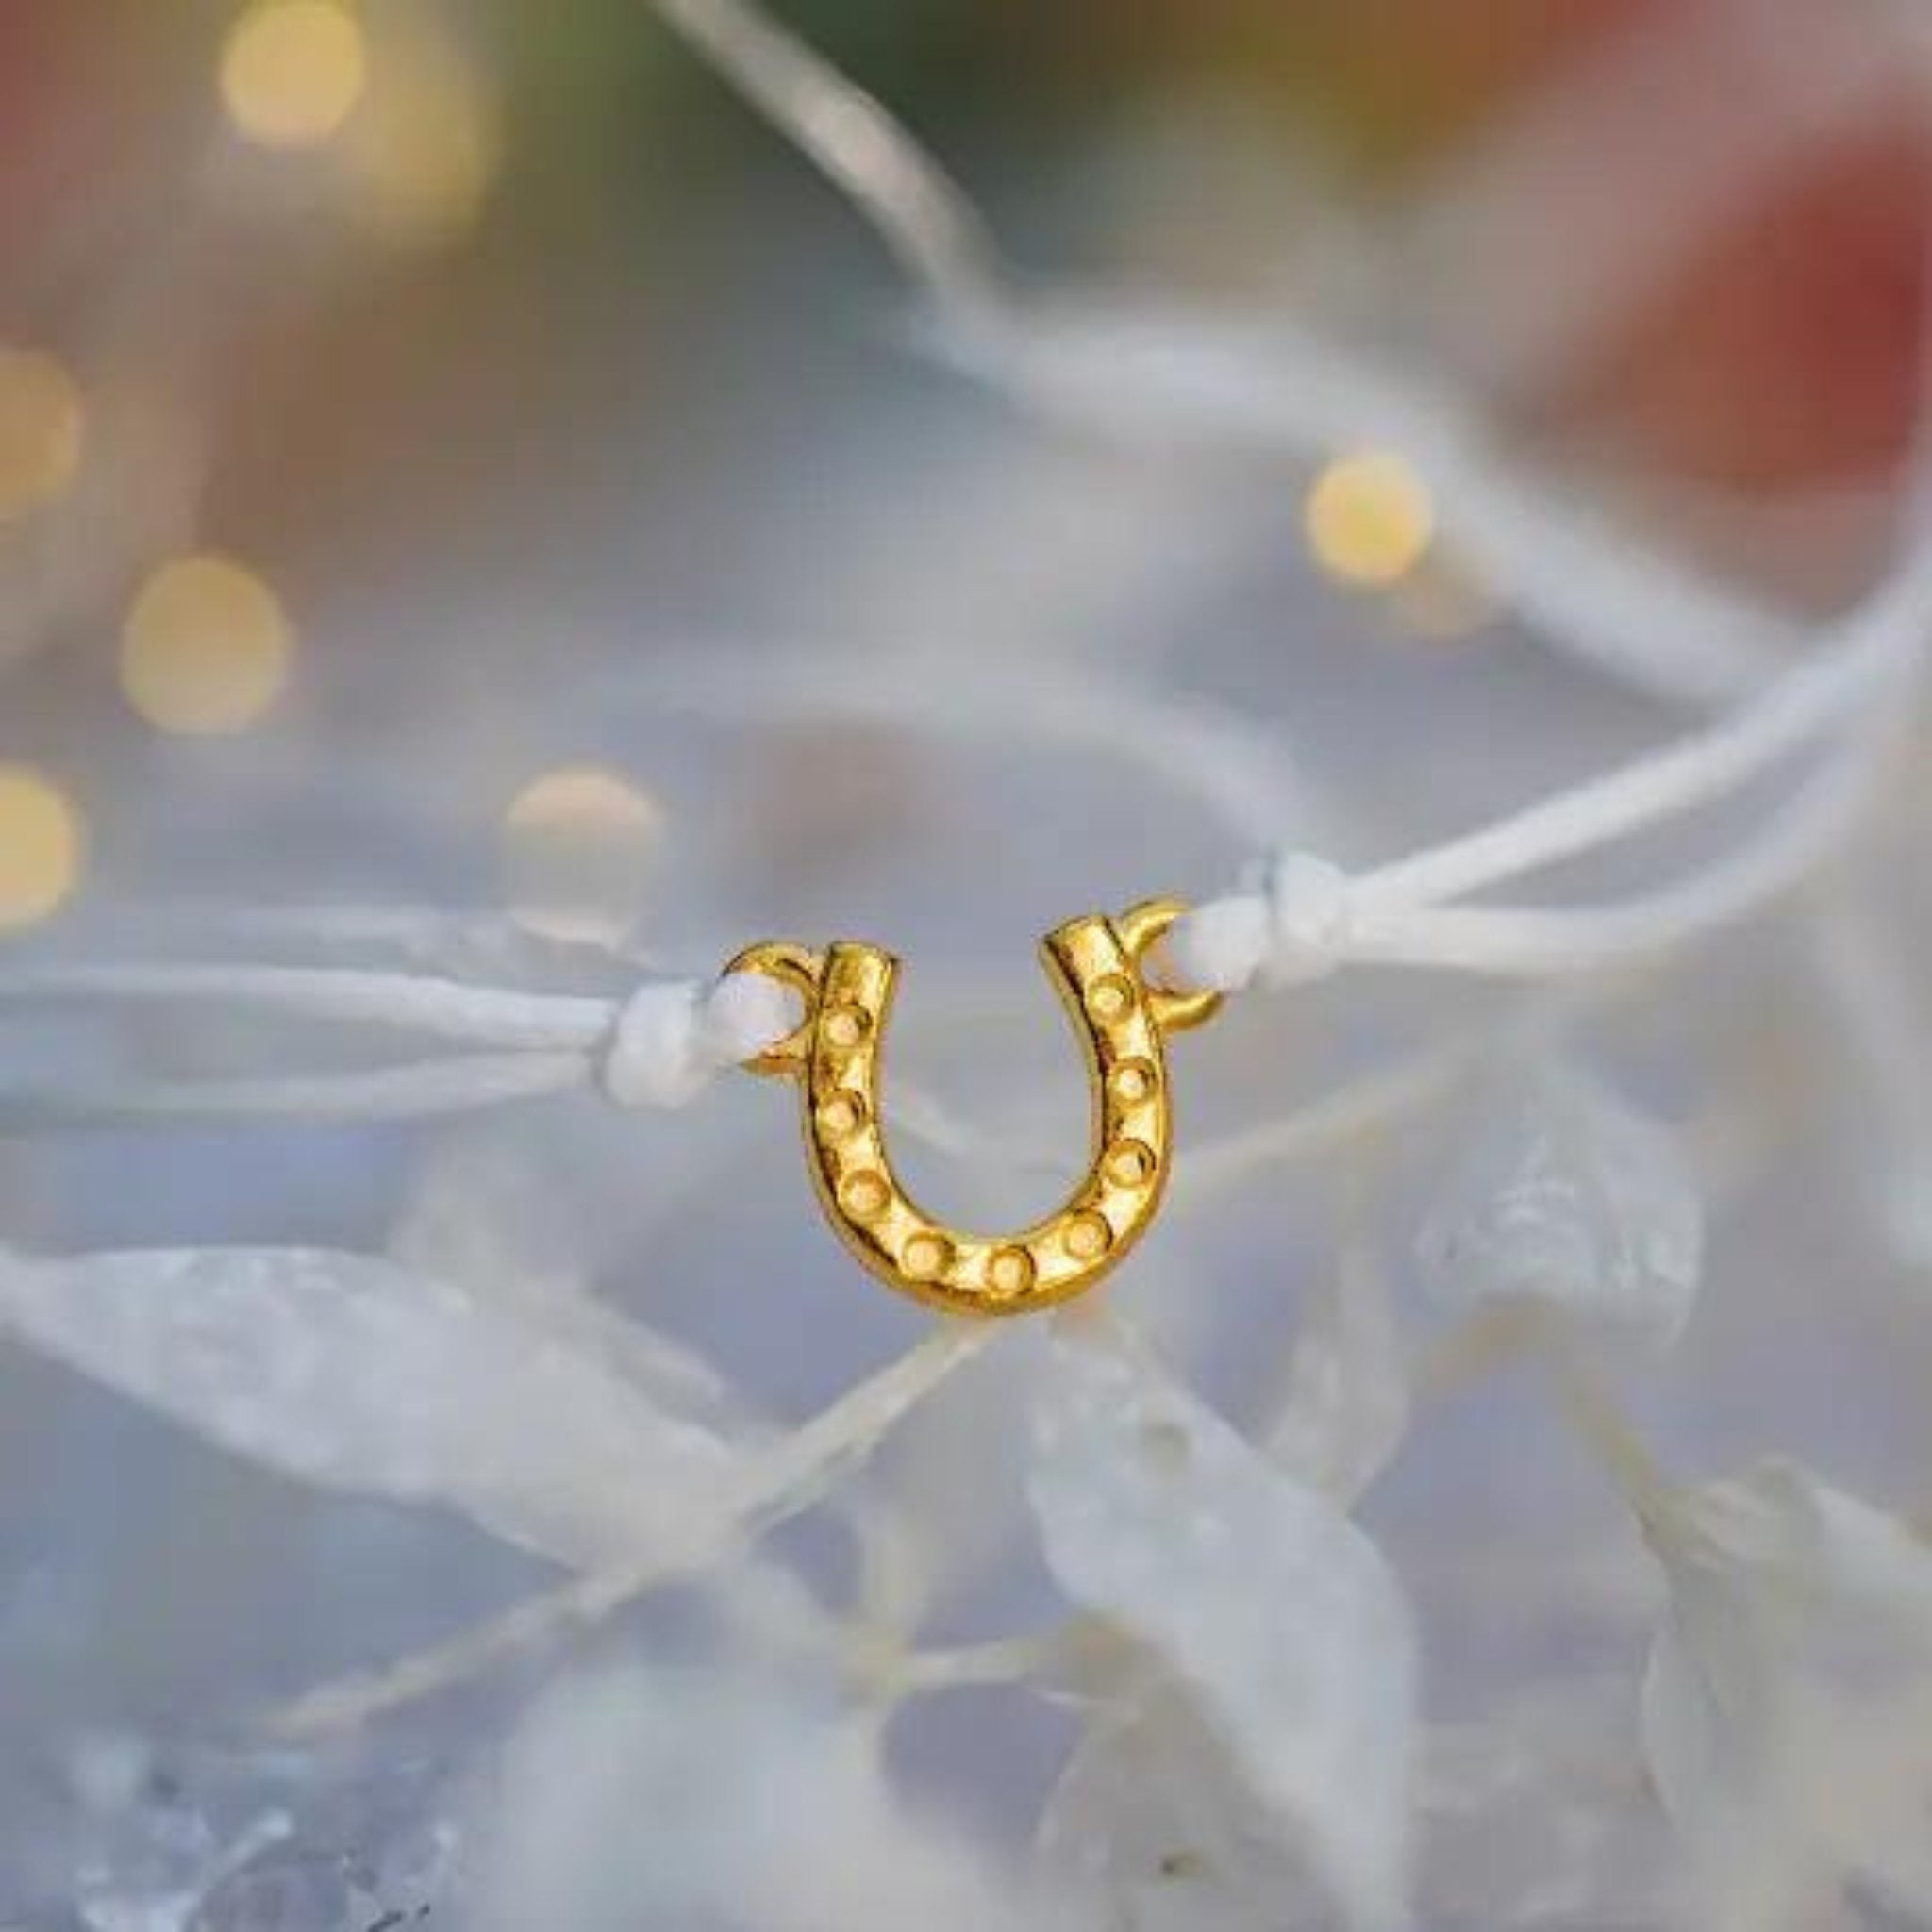 Good Luck Wish Bracelet - The Little Jewellery Company